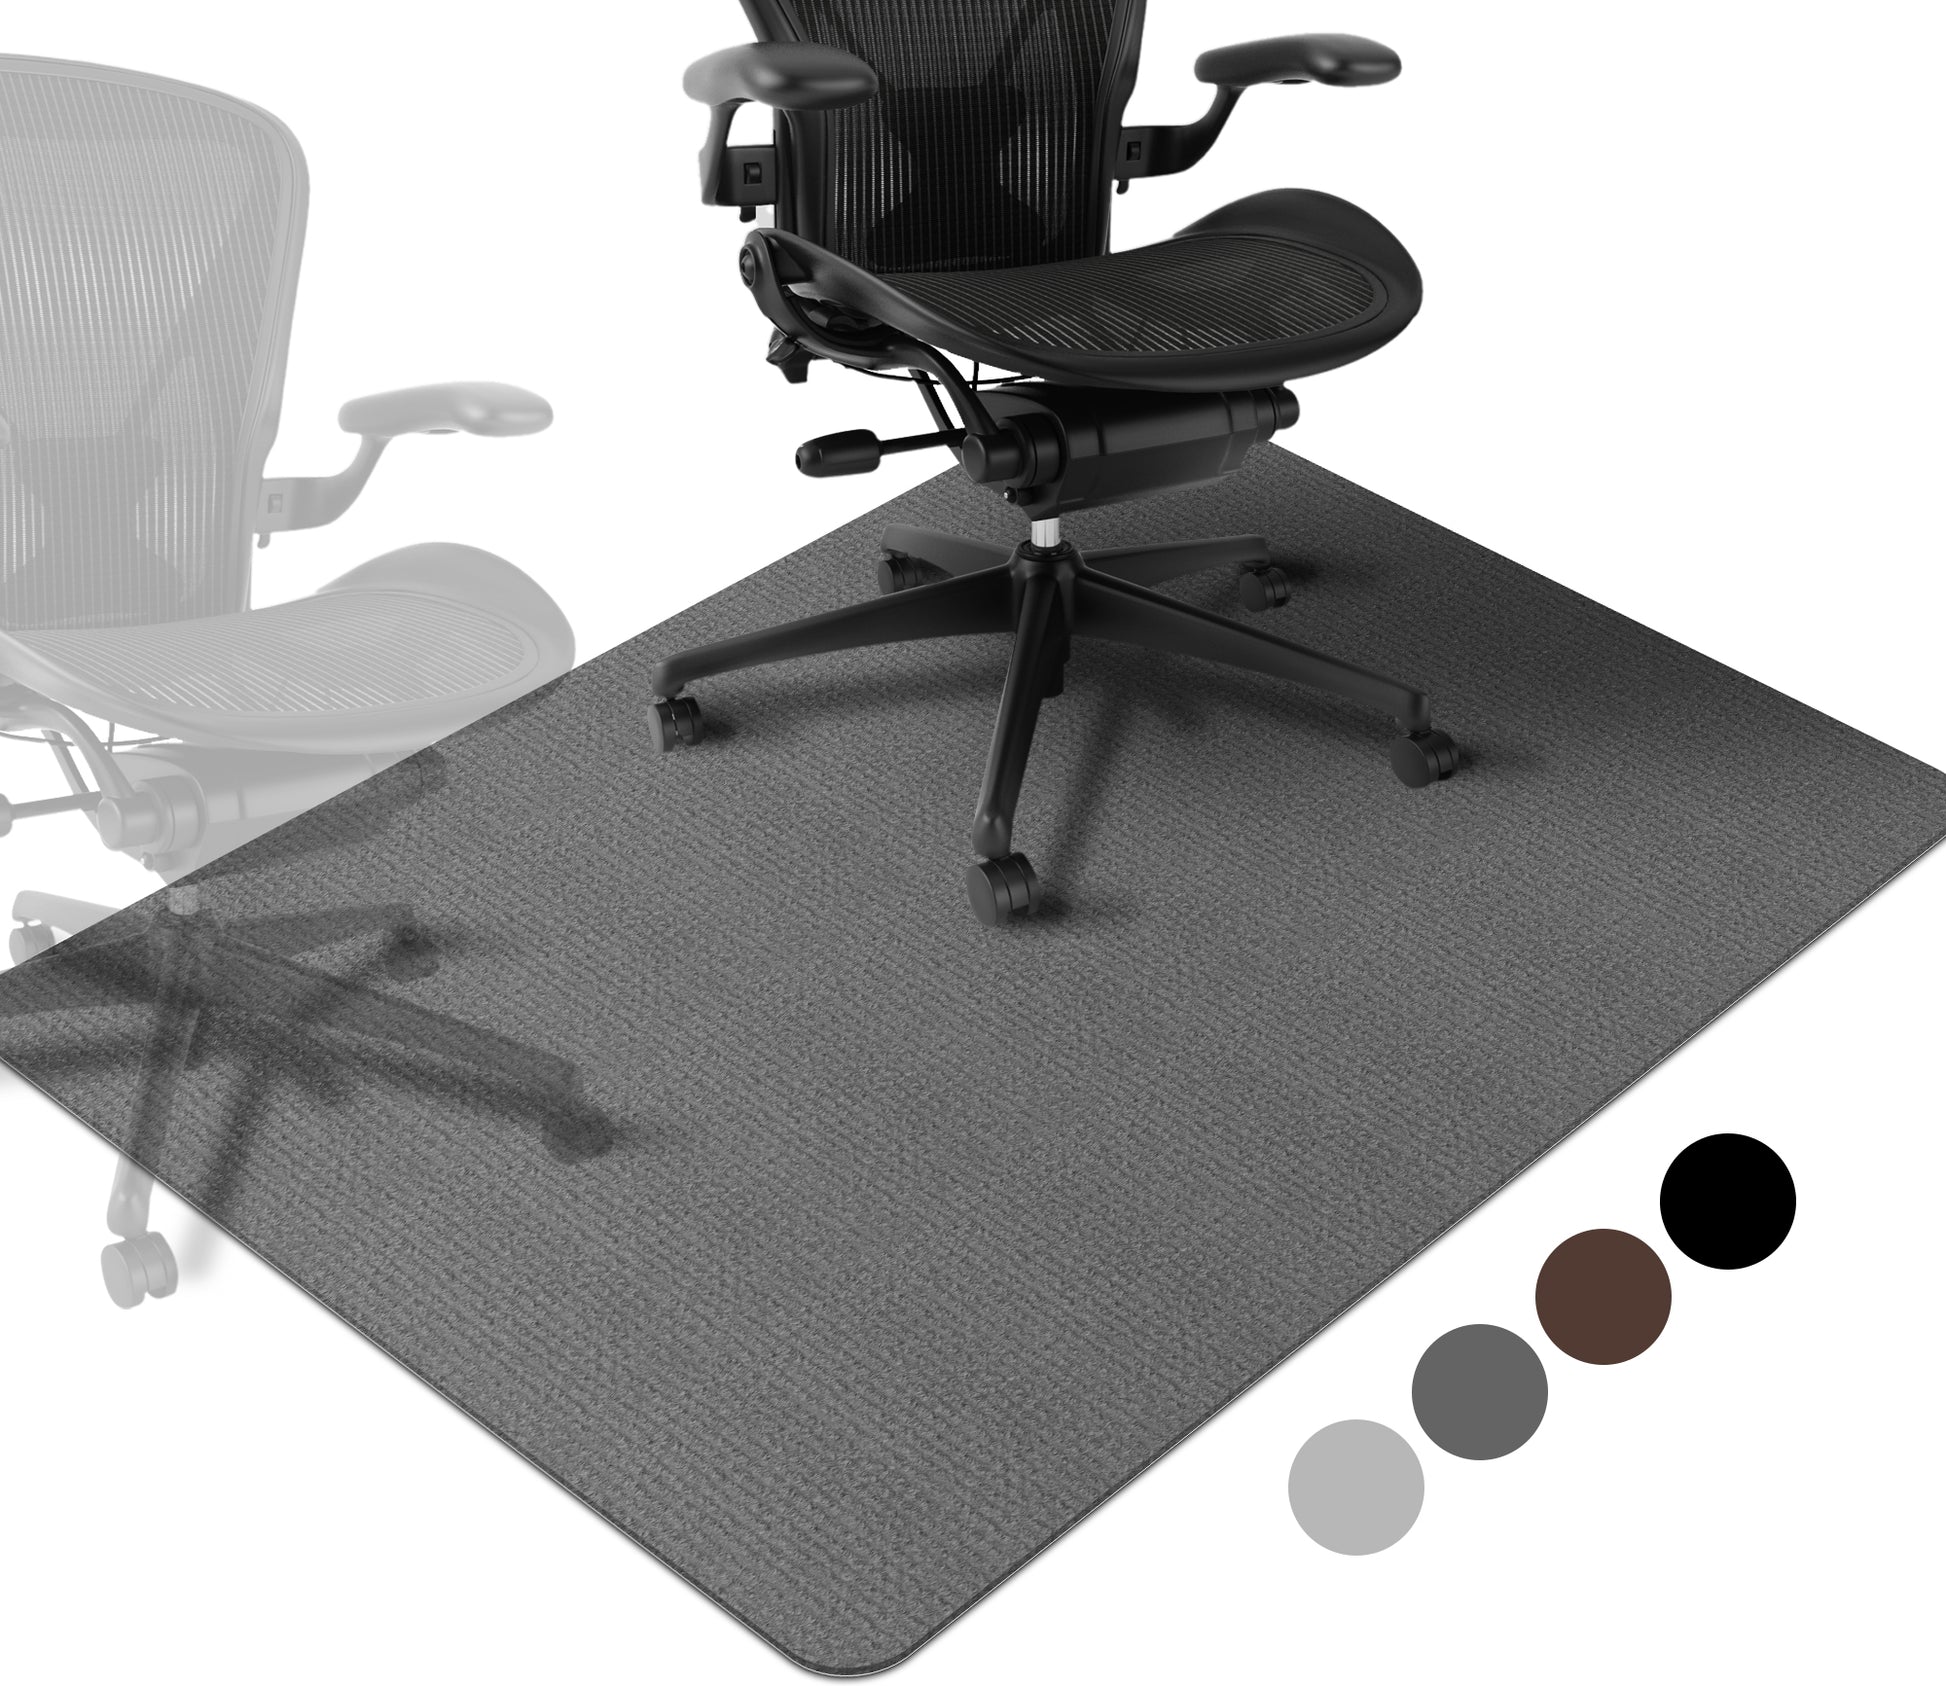 Aothia Office Hardwood Floor Chair Mat Product Description